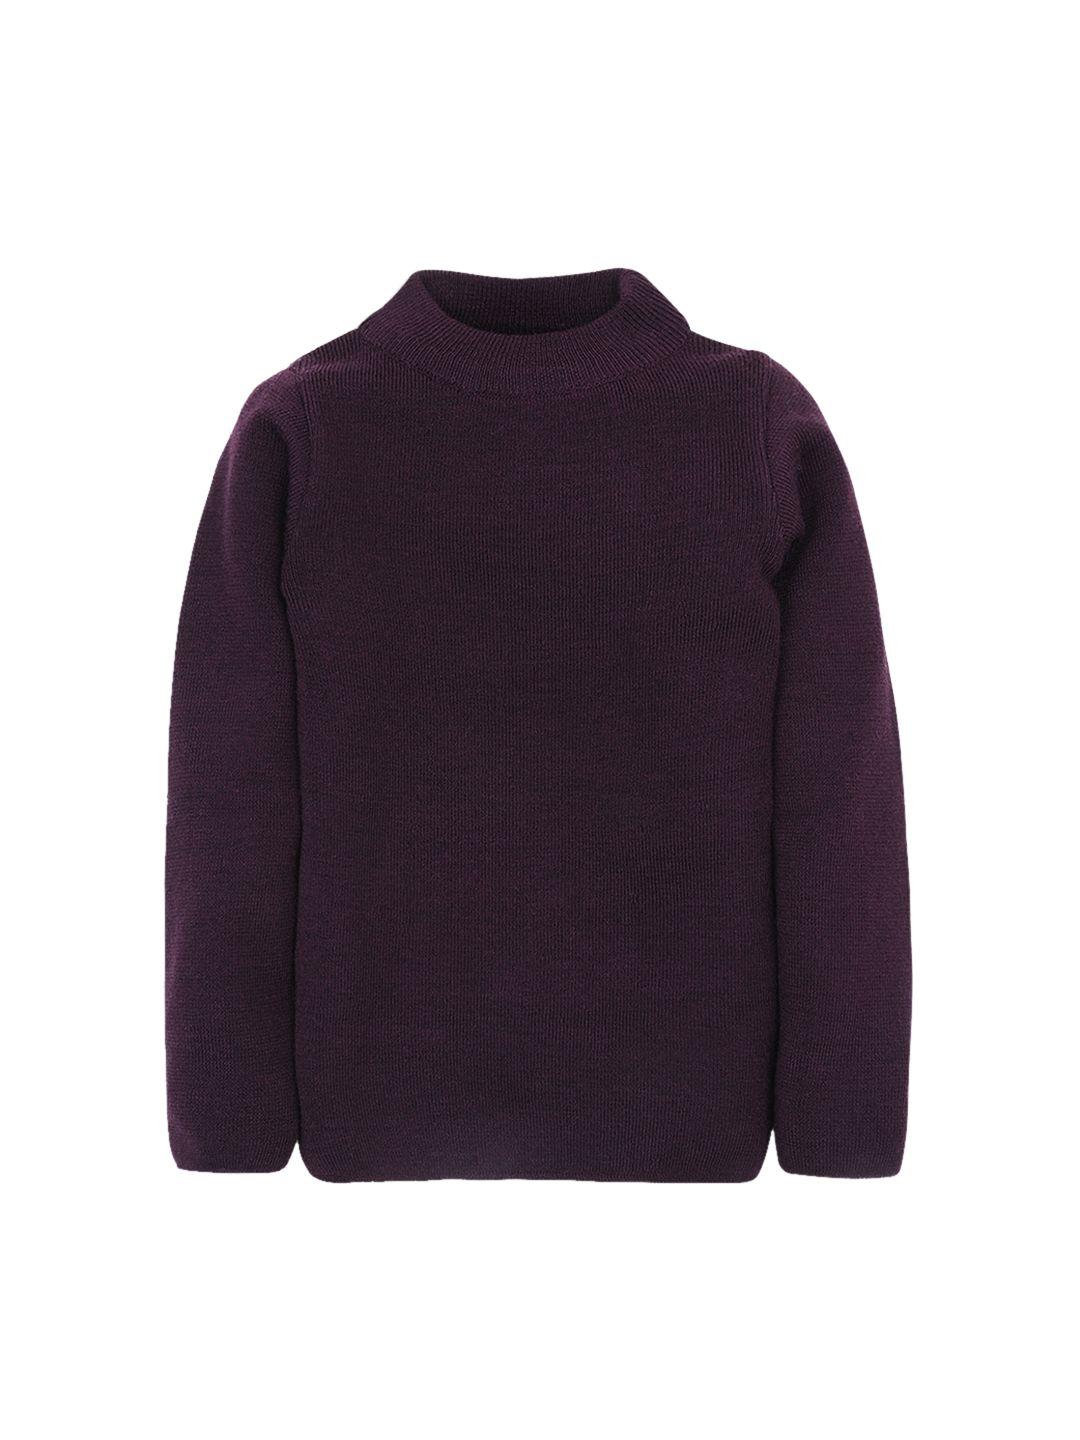 rvk kids purple solid sweater